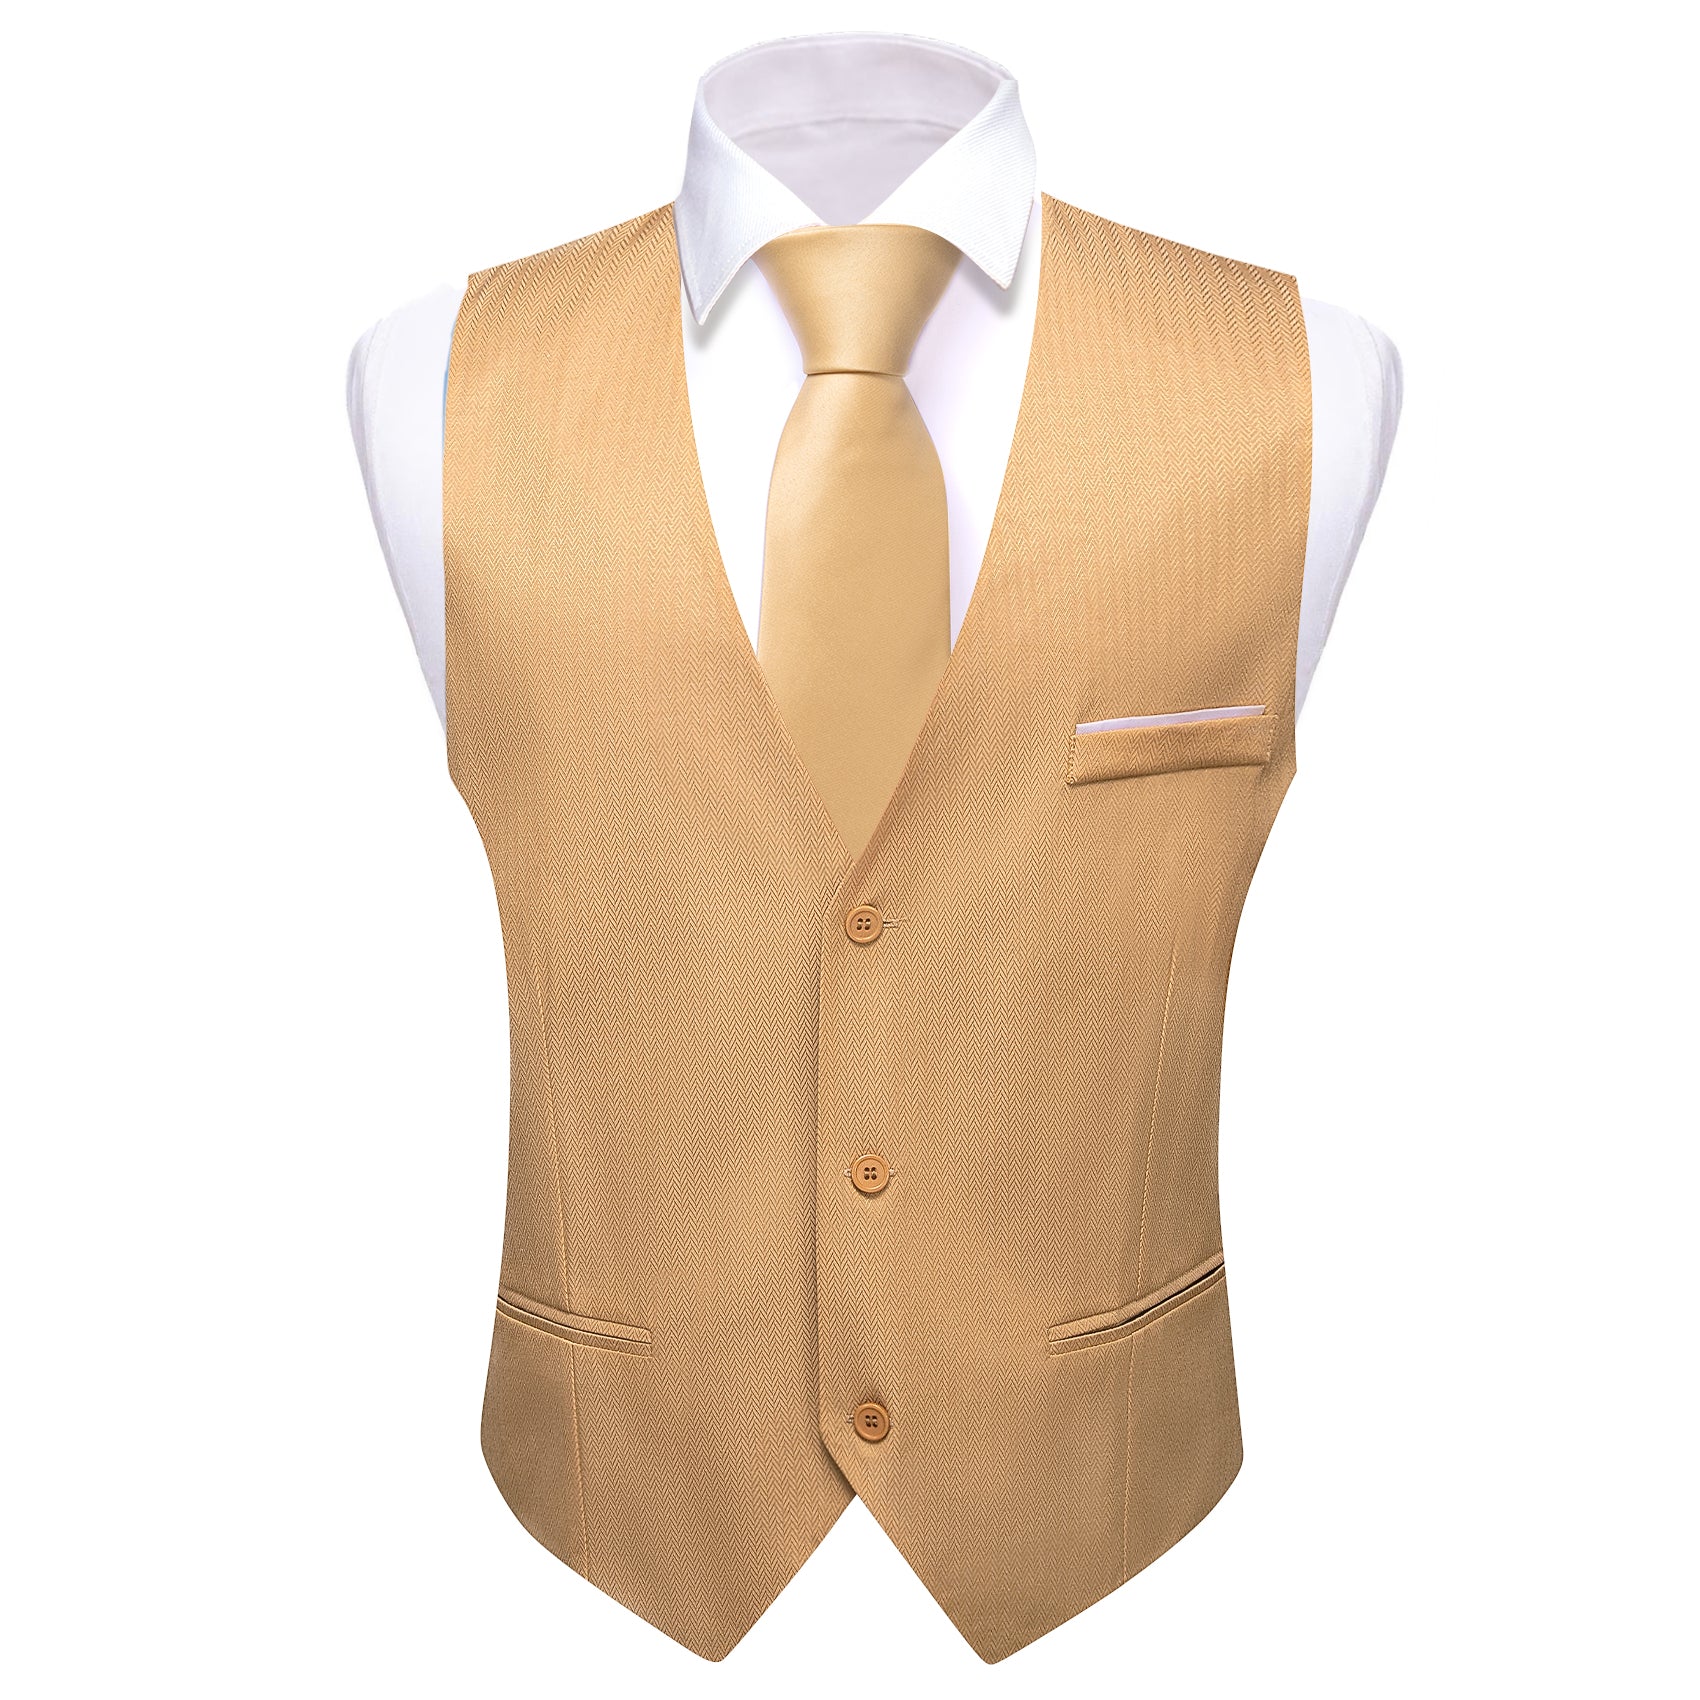 Men's Jasmine Solid Vest Suit for Business